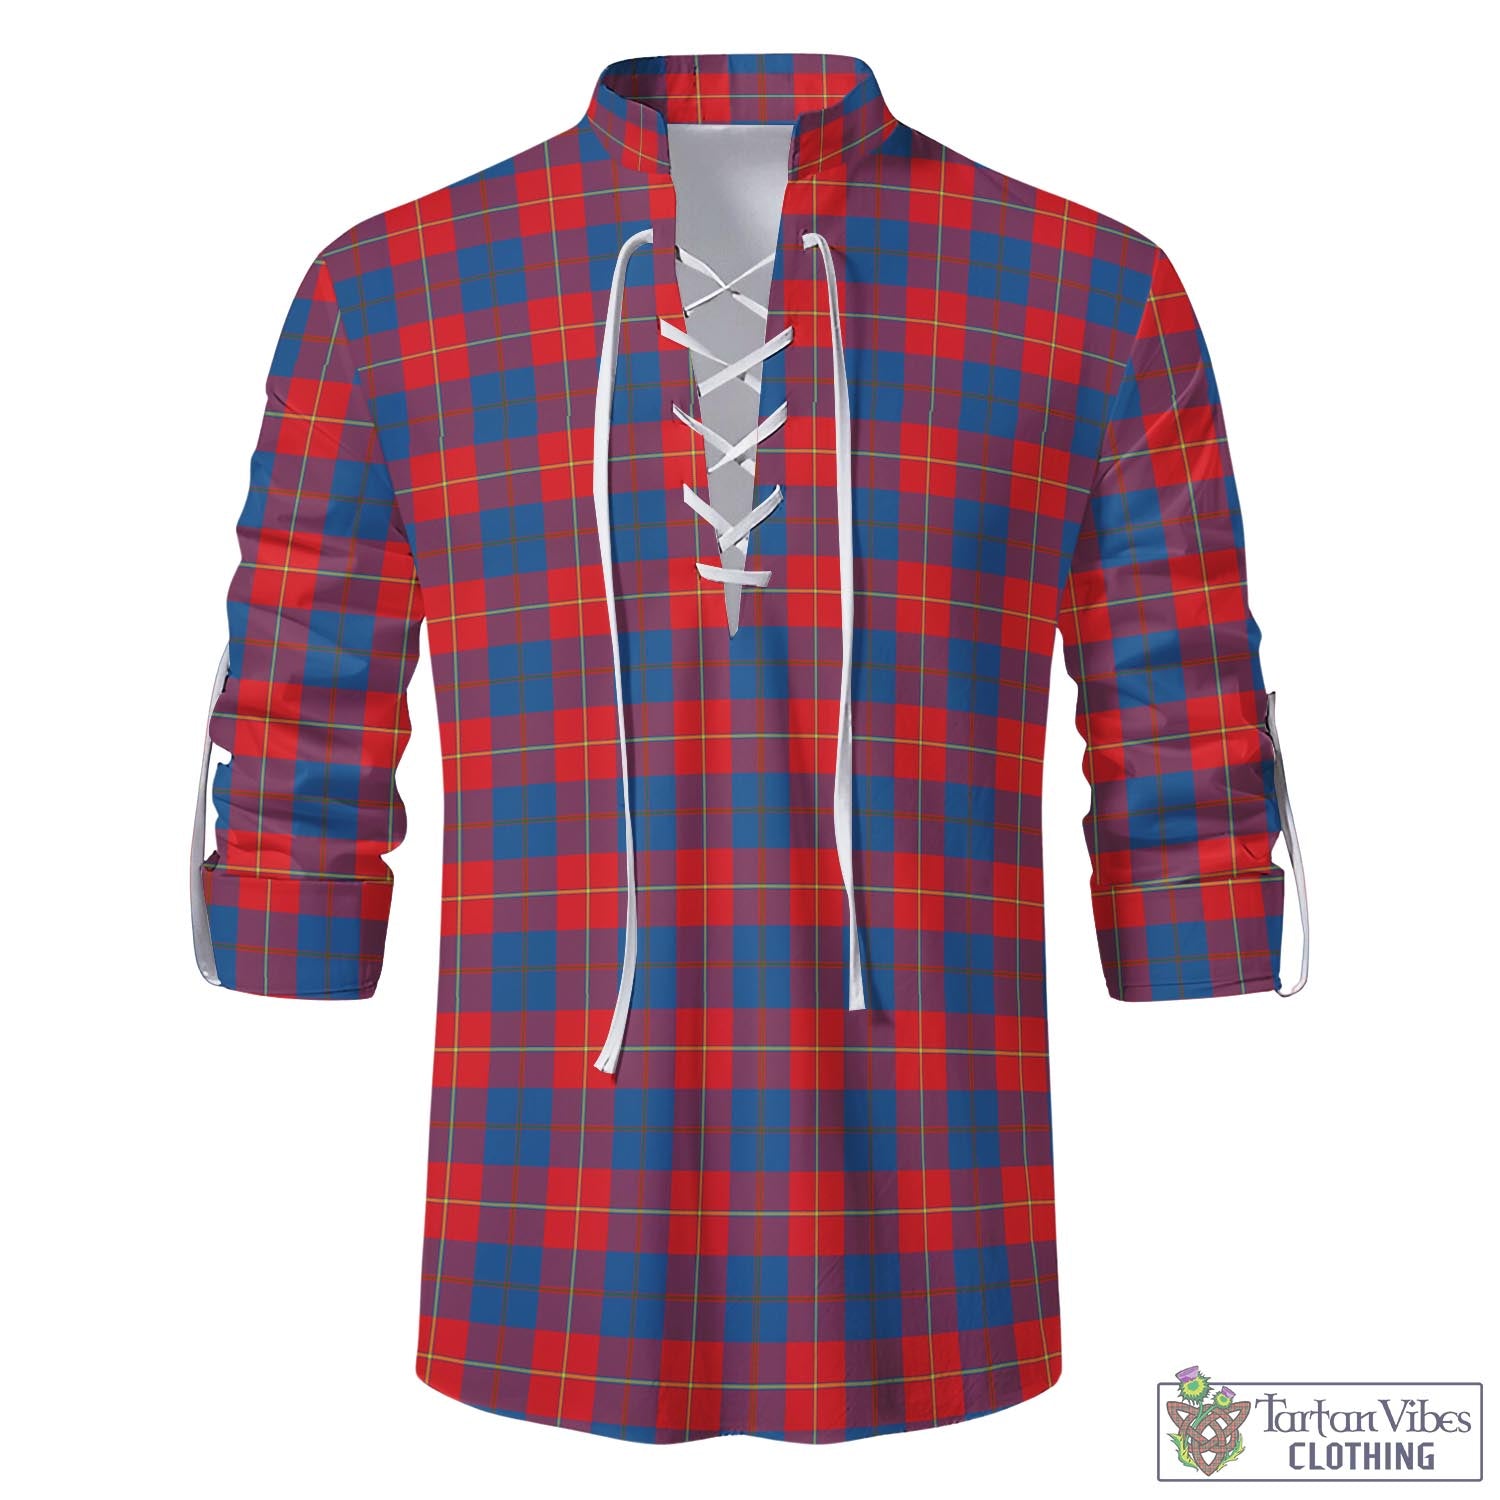 Tartan Vibes Clothing Galloway Red Tartan Men's Scottish Traditional Jacobite Ghillie Kilt Shirt